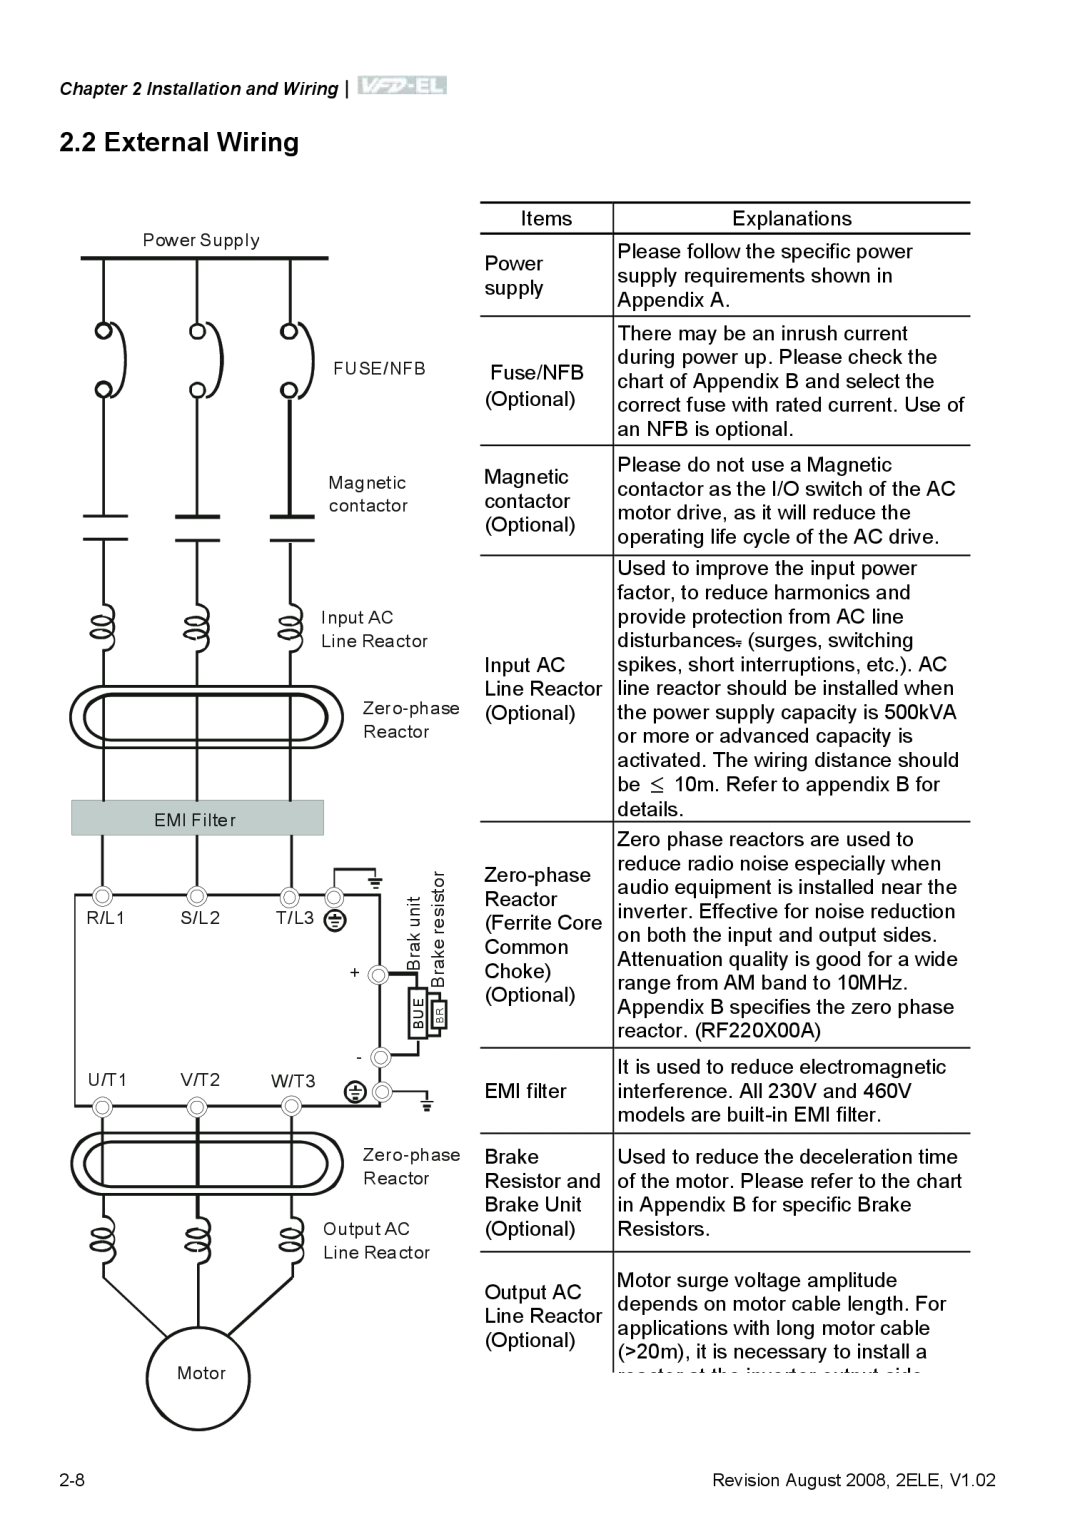 Delta Electronics VFD-EL manual External Wiring, unitBrak resistorBrake, Bue Br 